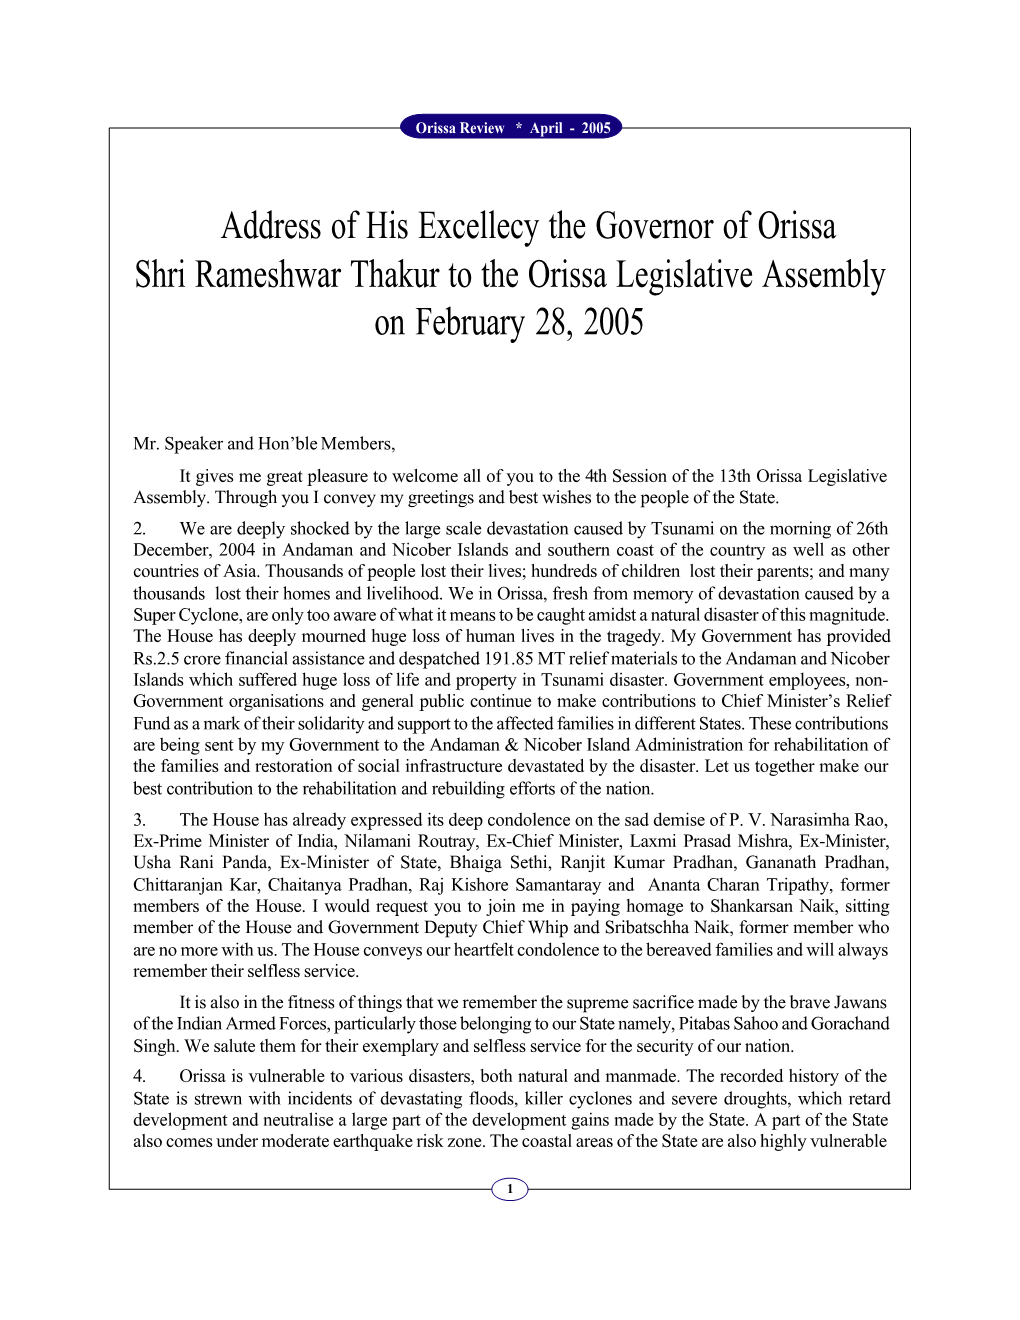 Address of His Excellecy the Governor of Orissa Shri Rameshwar Thakur to the Orissa Legislative Assembly on February 28, 2005